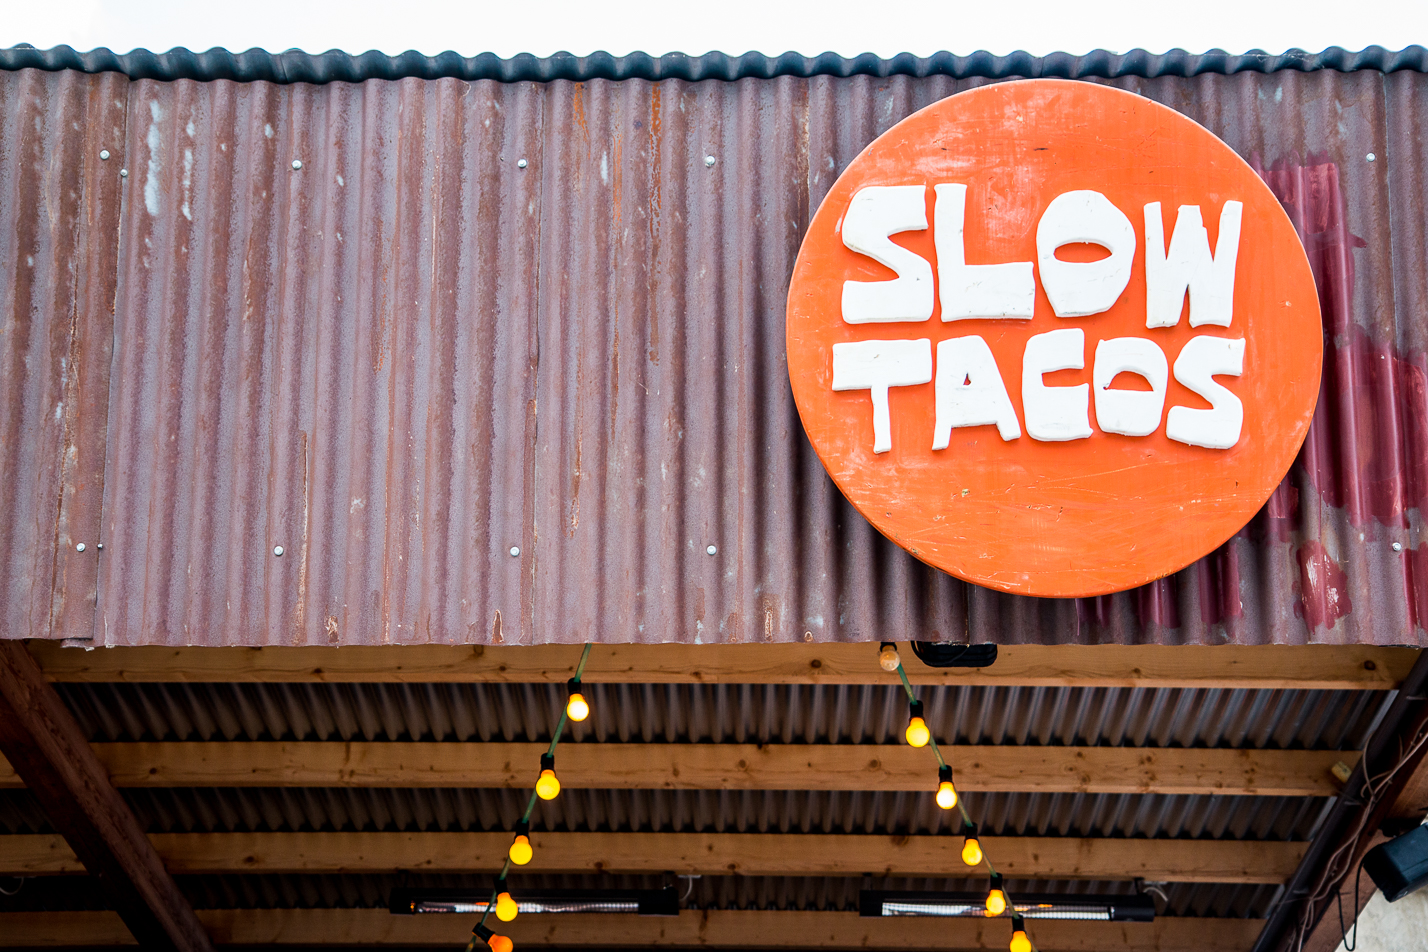 Vienna Picks: Slow Tacos | Love Daily Dose